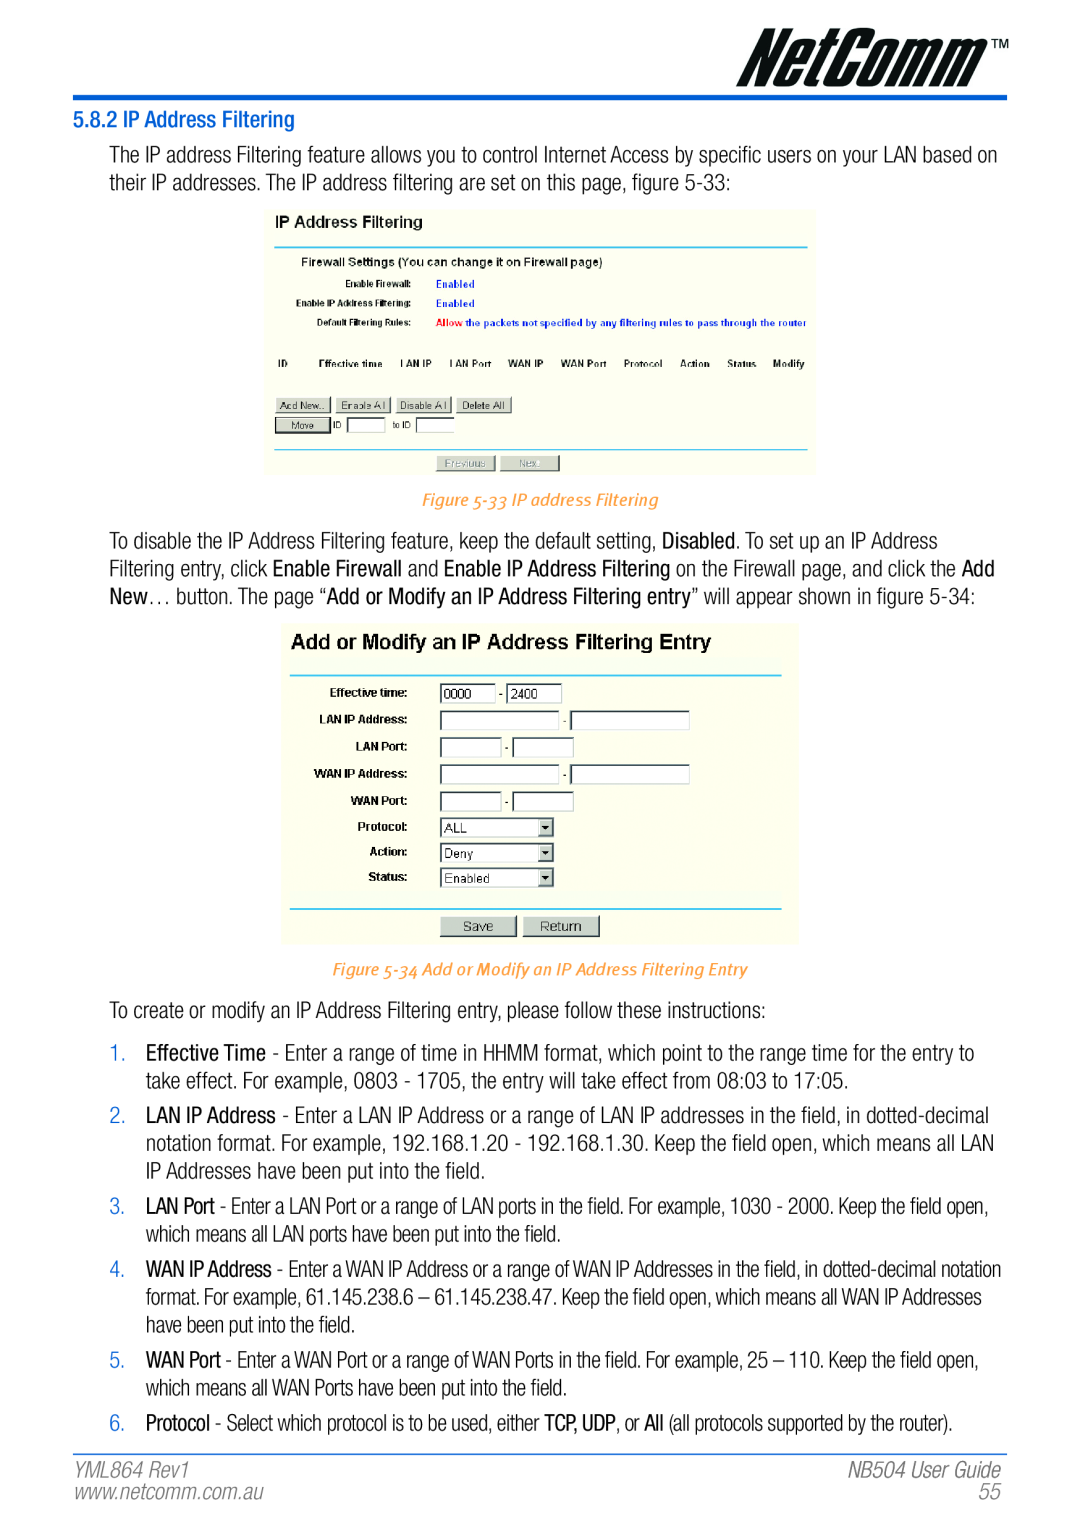 NetComm NB504 manual YML864 Rev1, 33 IP address Filtering, 34 Add or Modify an IP Address Filtering Entry 